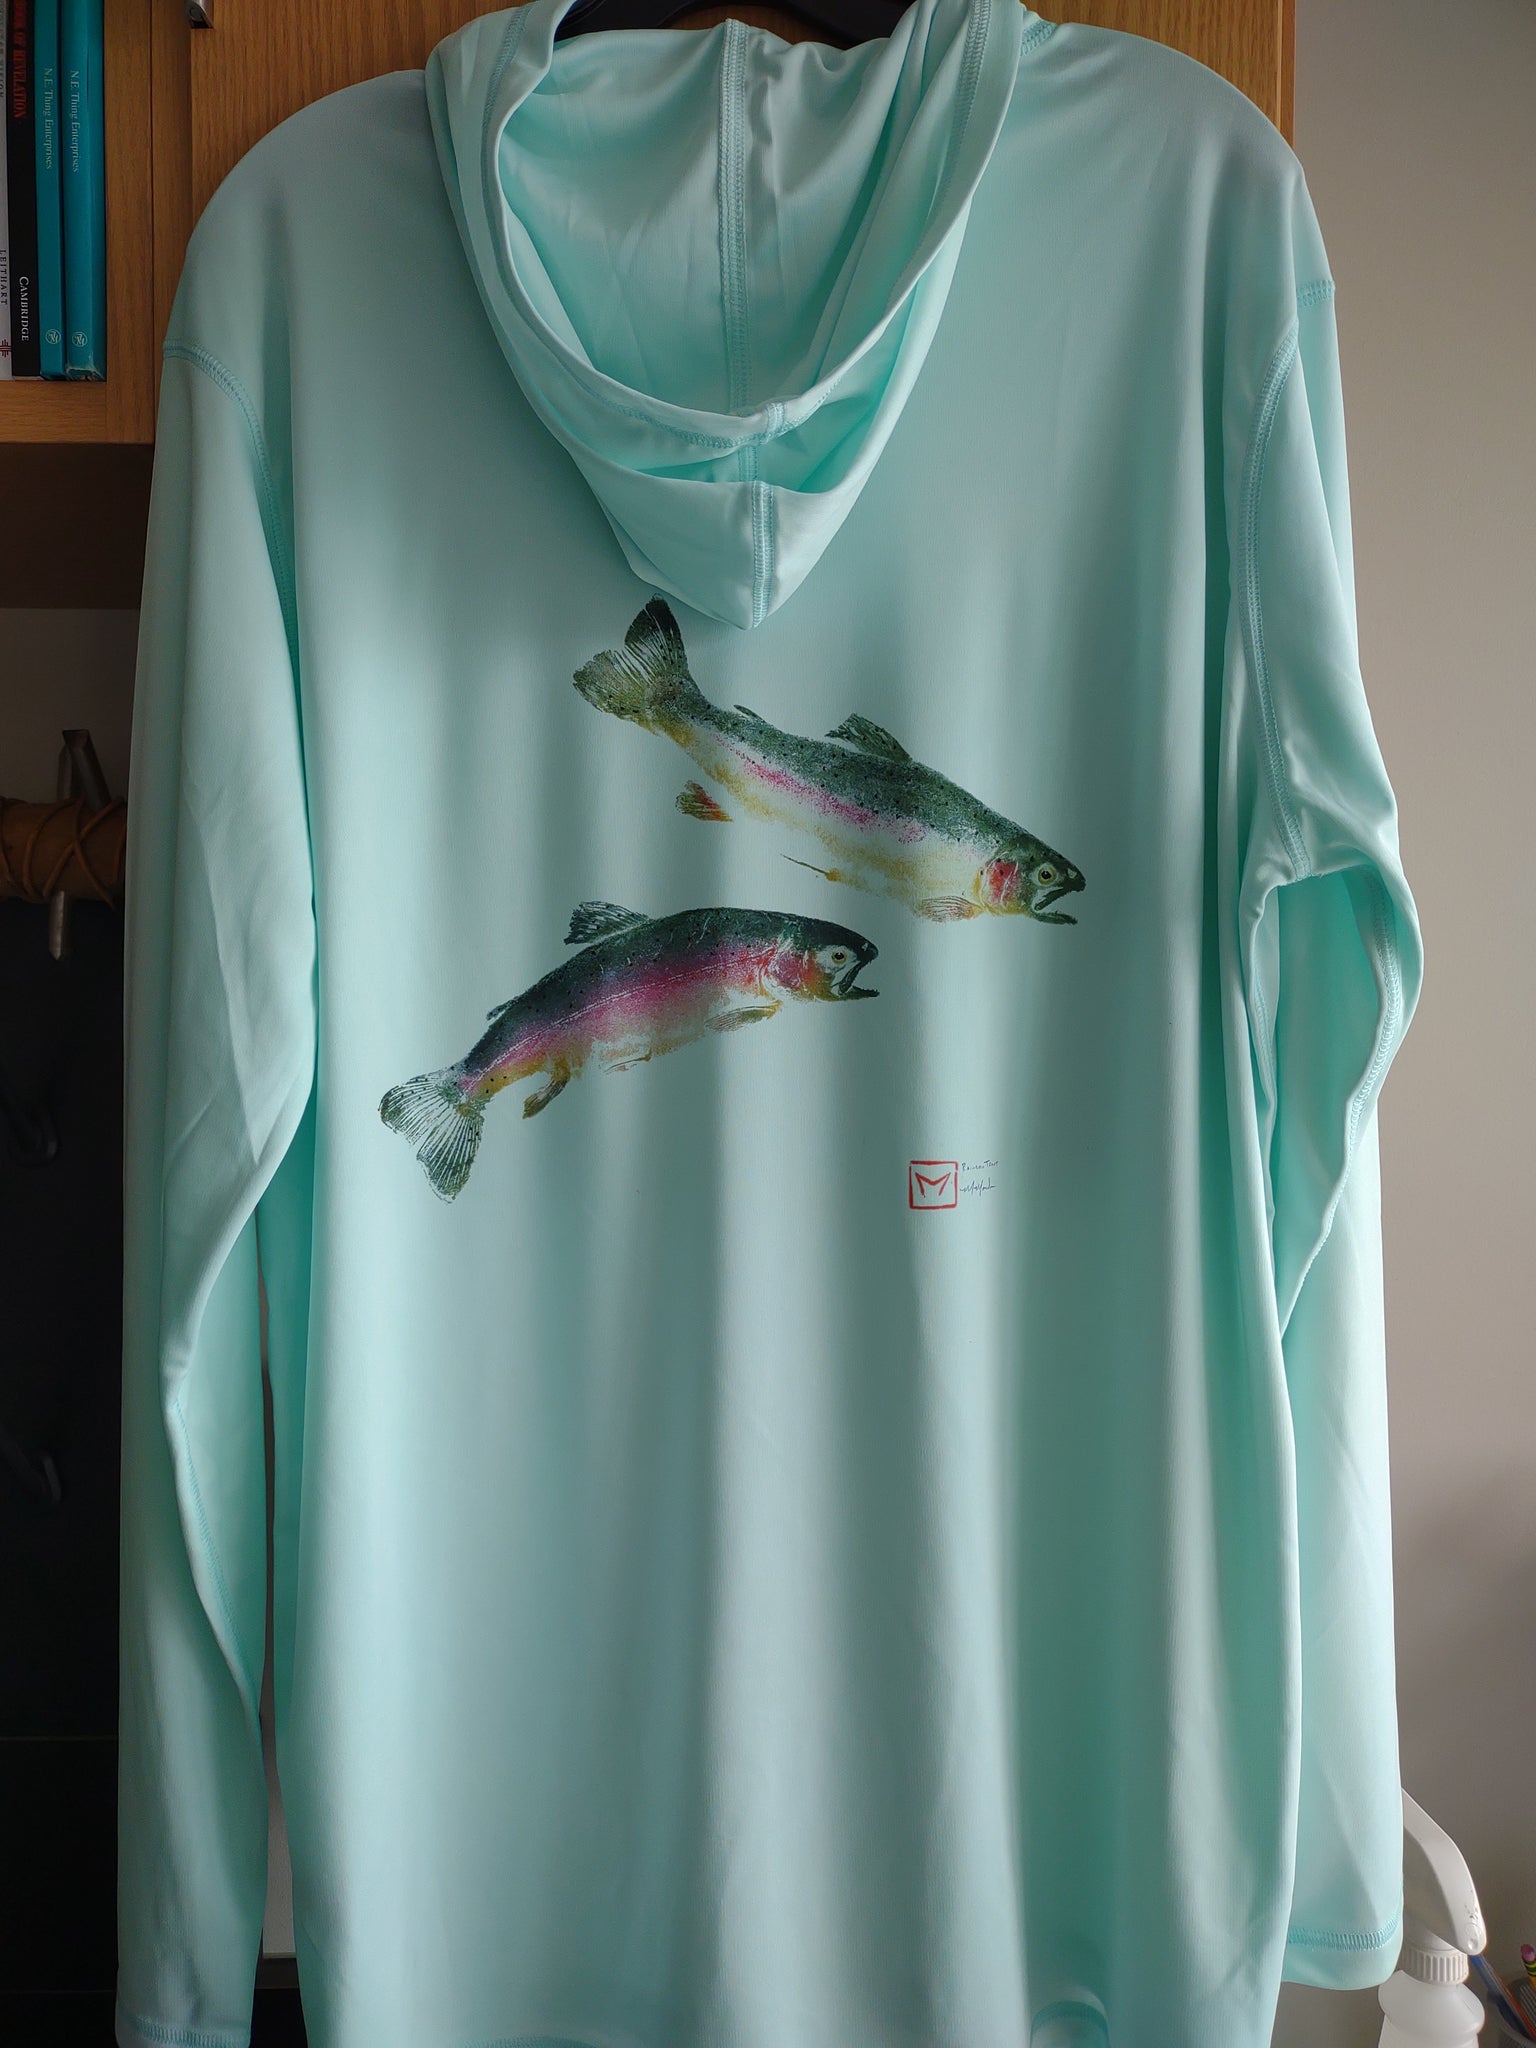 6th Sense Fishing Net Man Tee - Heavy Metal Tee Shirts, Buy Cheap Online  6th Sense Fishing Sales Store